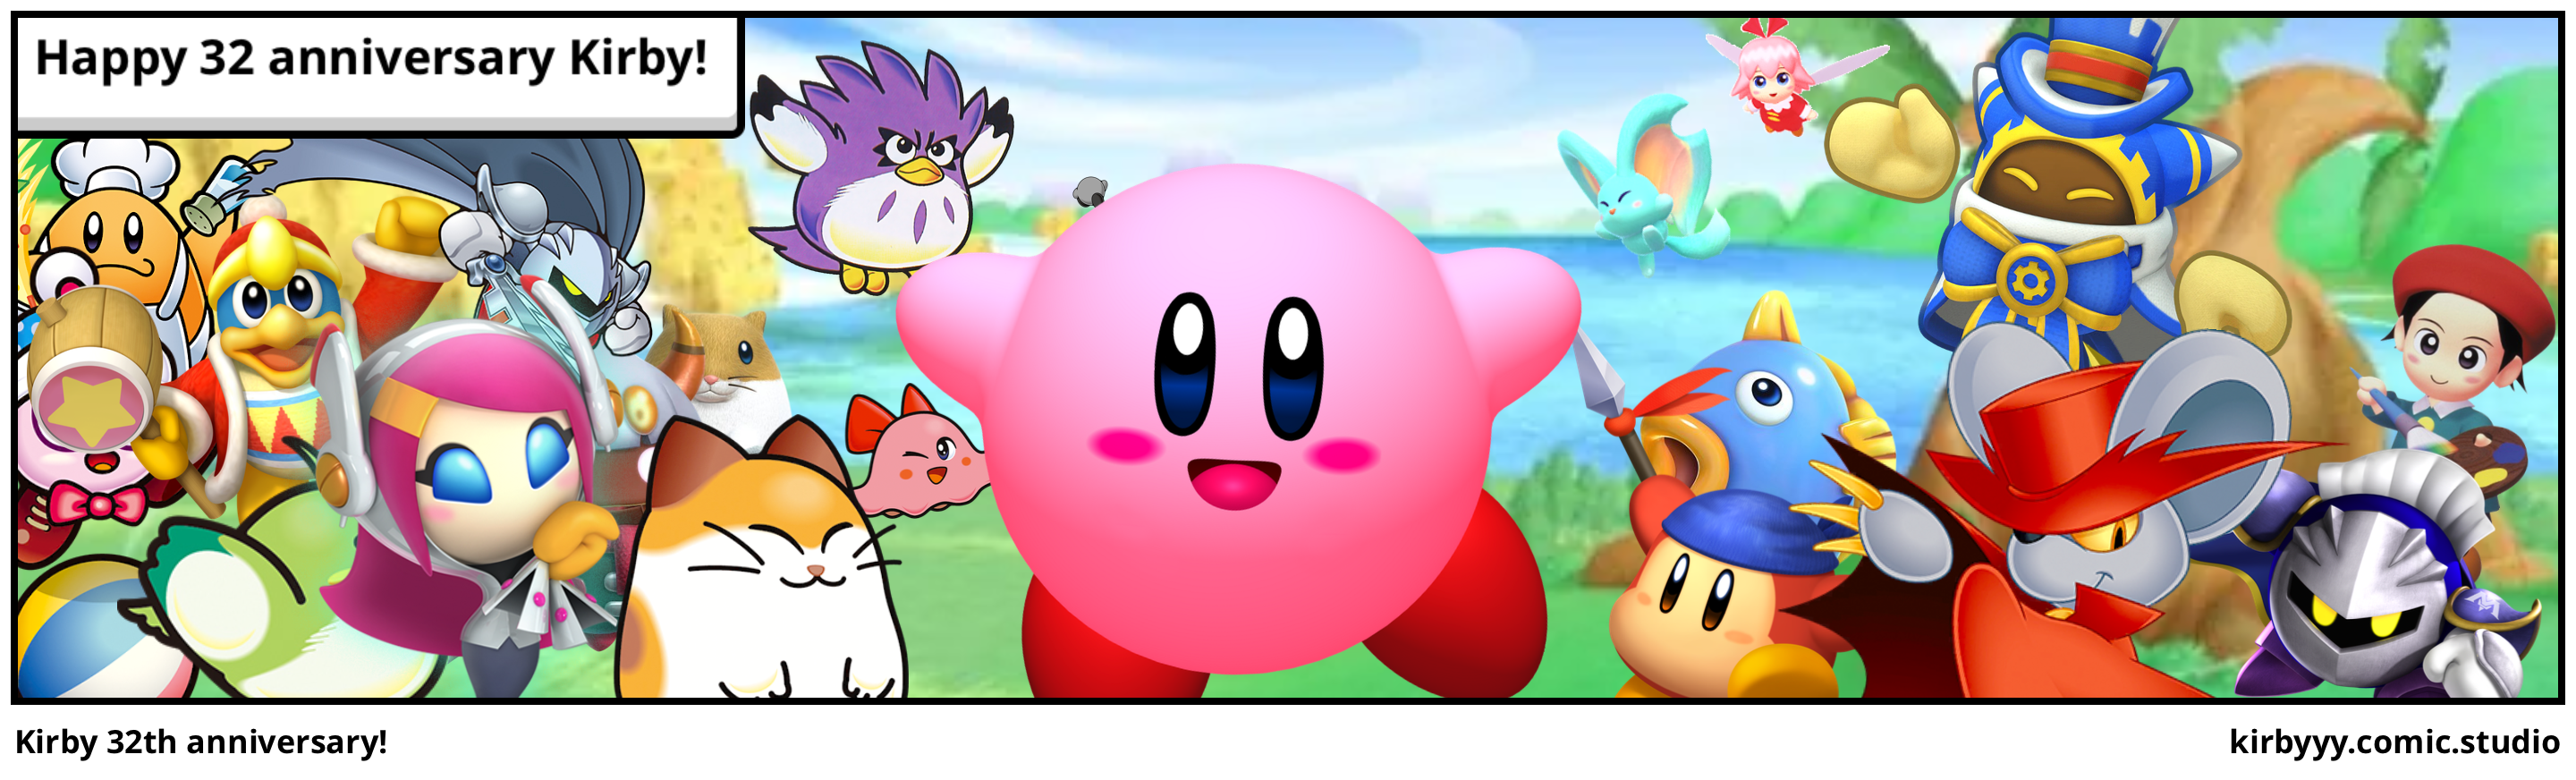 Kirby 32th anniversary!